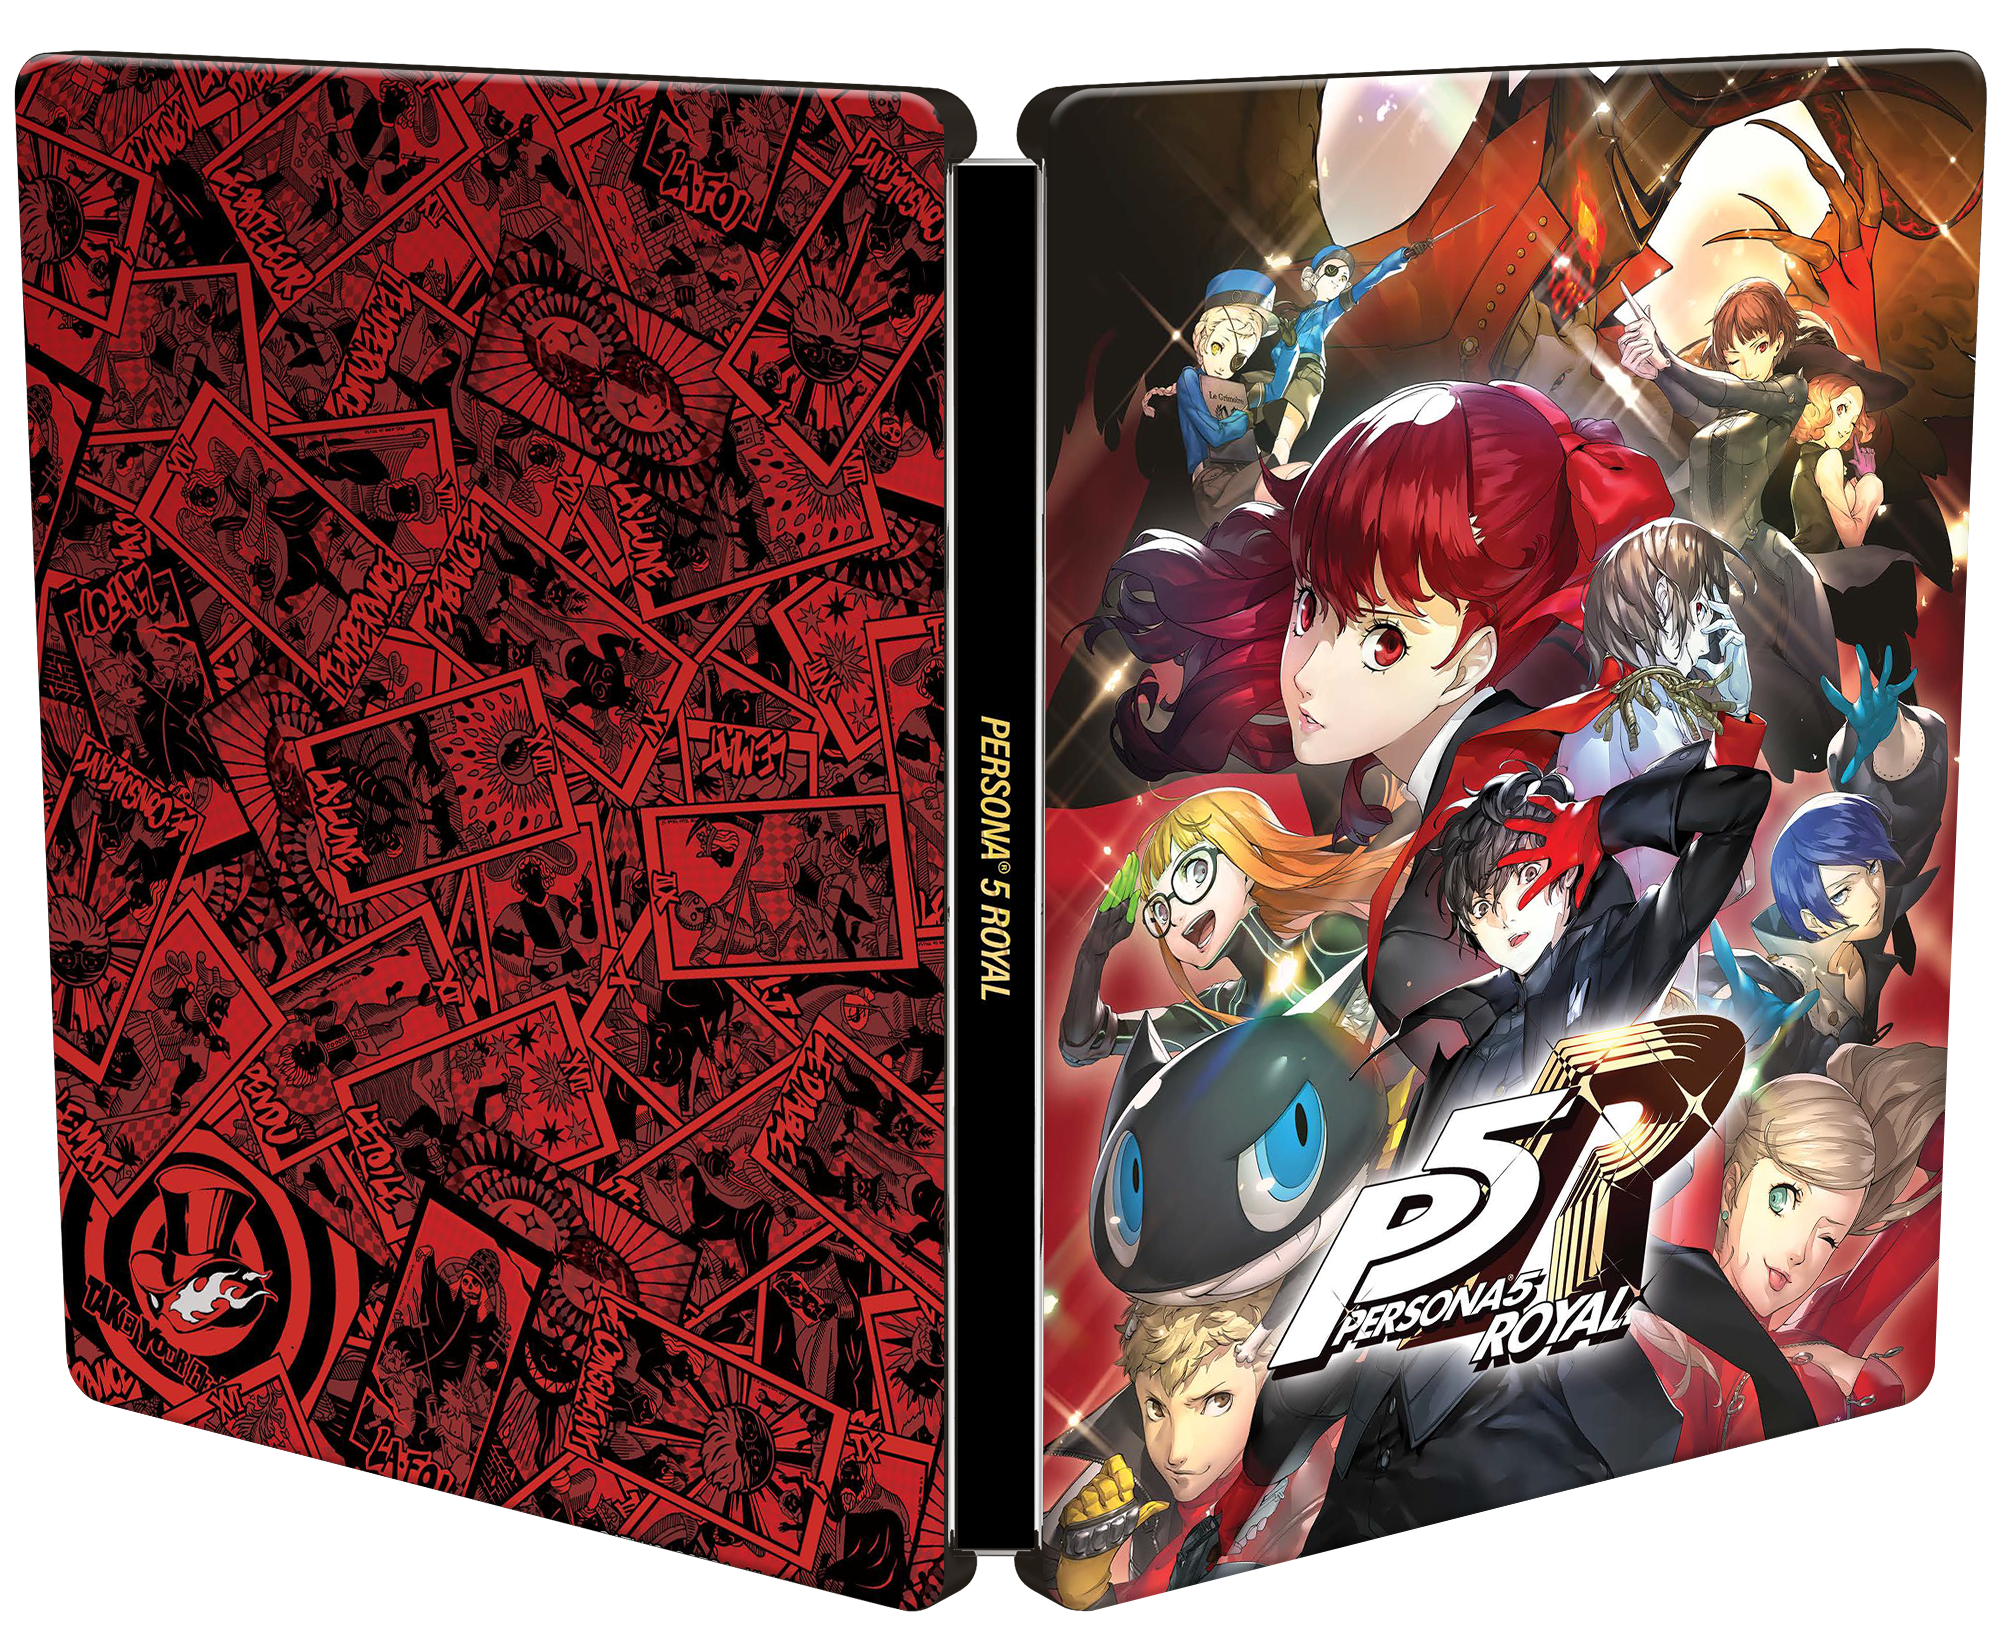 Persona 5 - Royal Switch] - Edition Steelbook [Nintendo